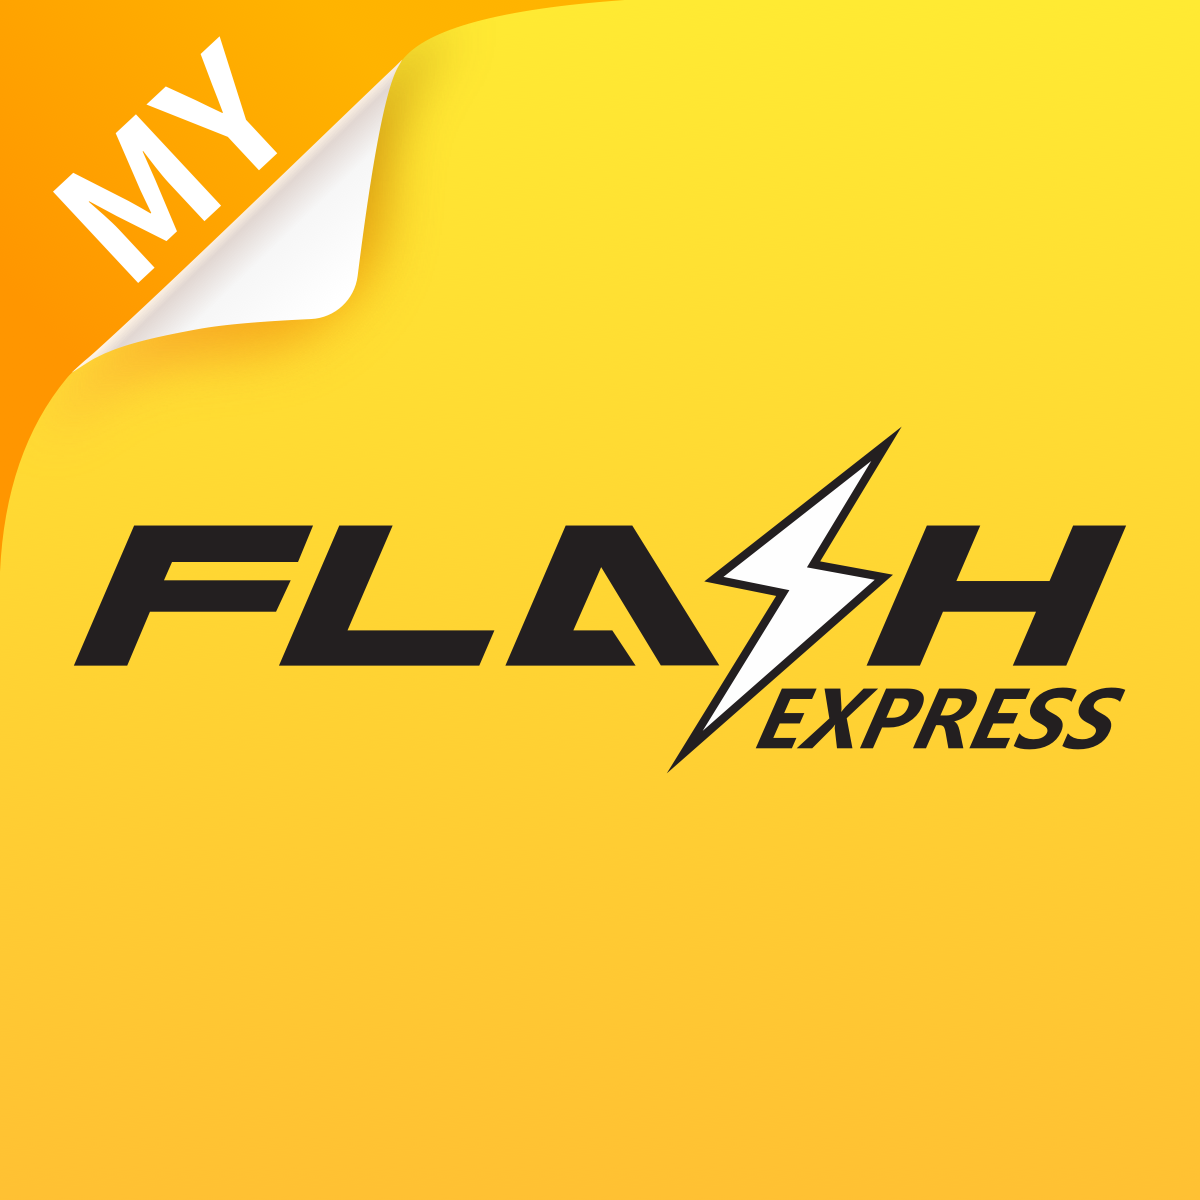 Flash Express Malaysia